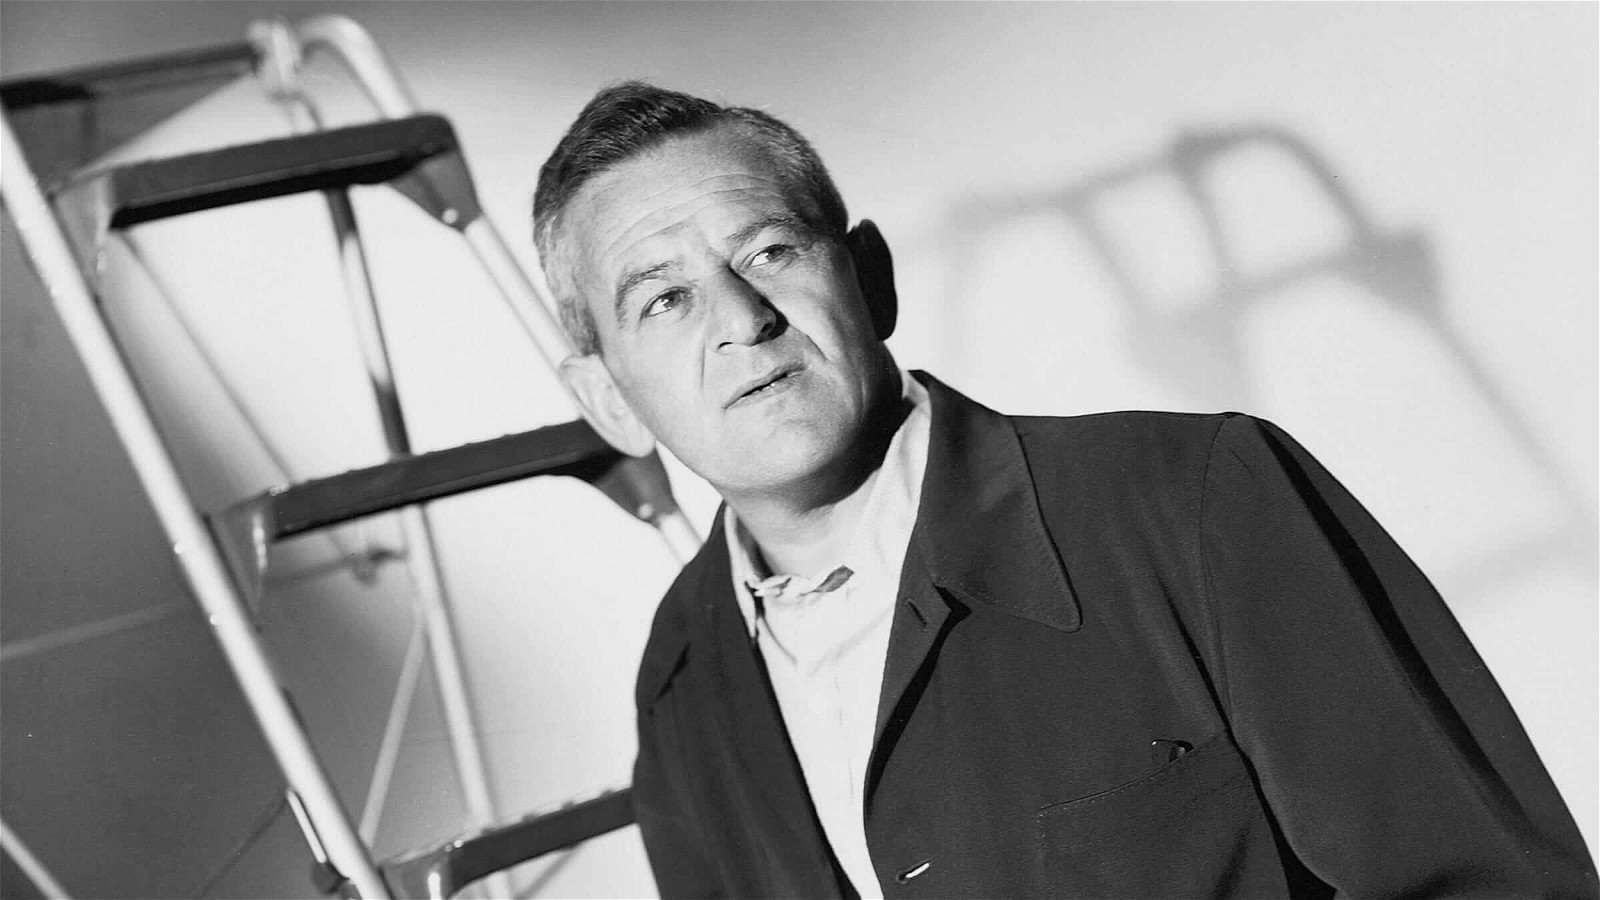 Legendary director William Wyler